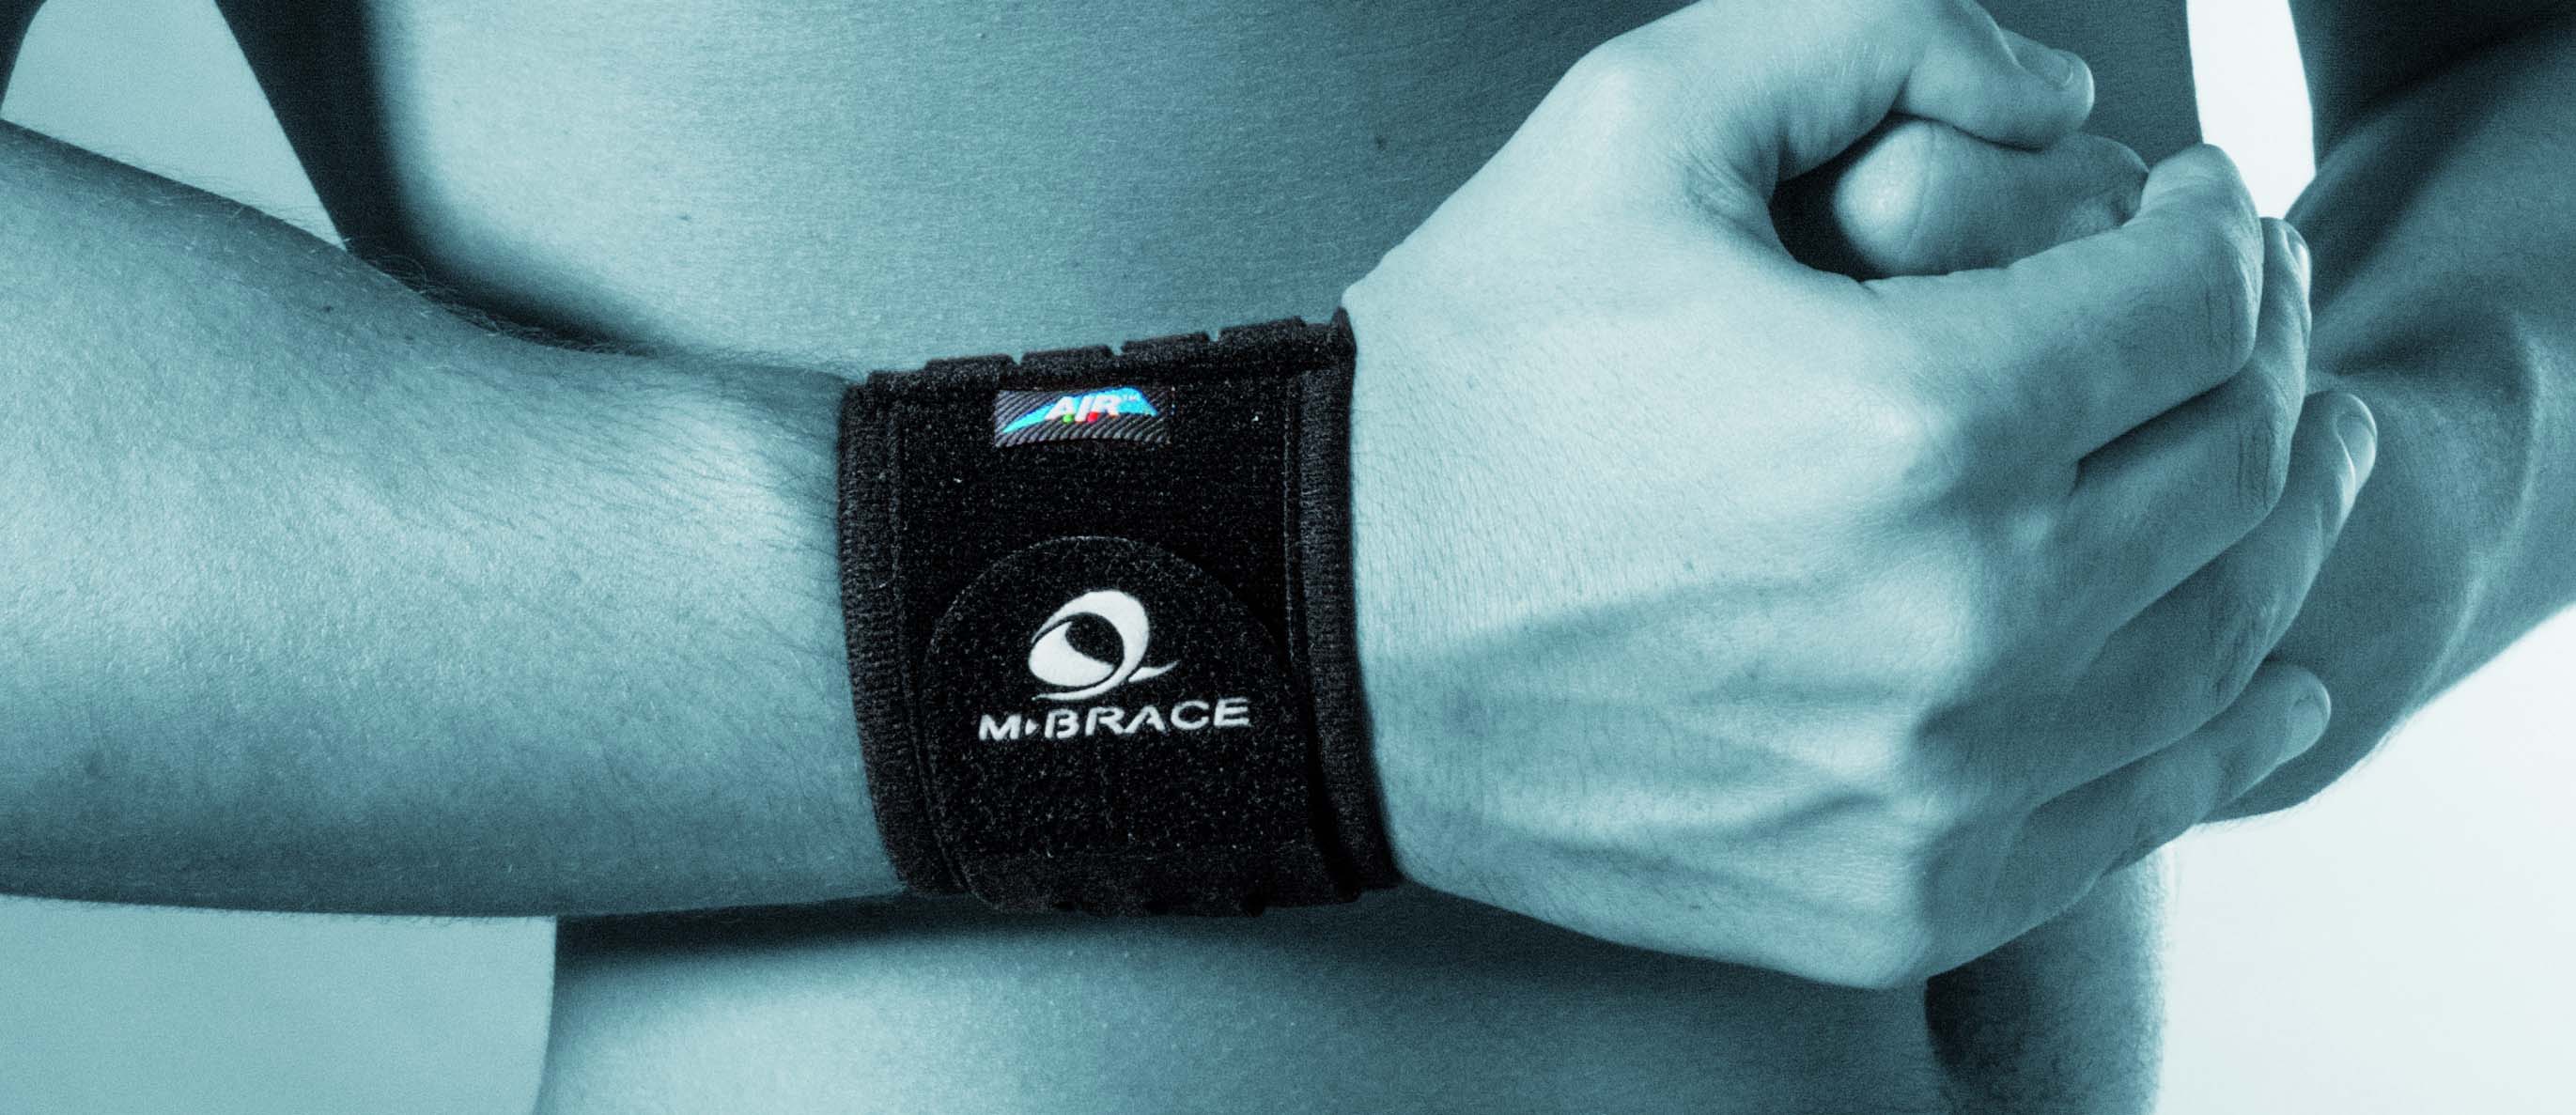 M-Brace Wrist Support